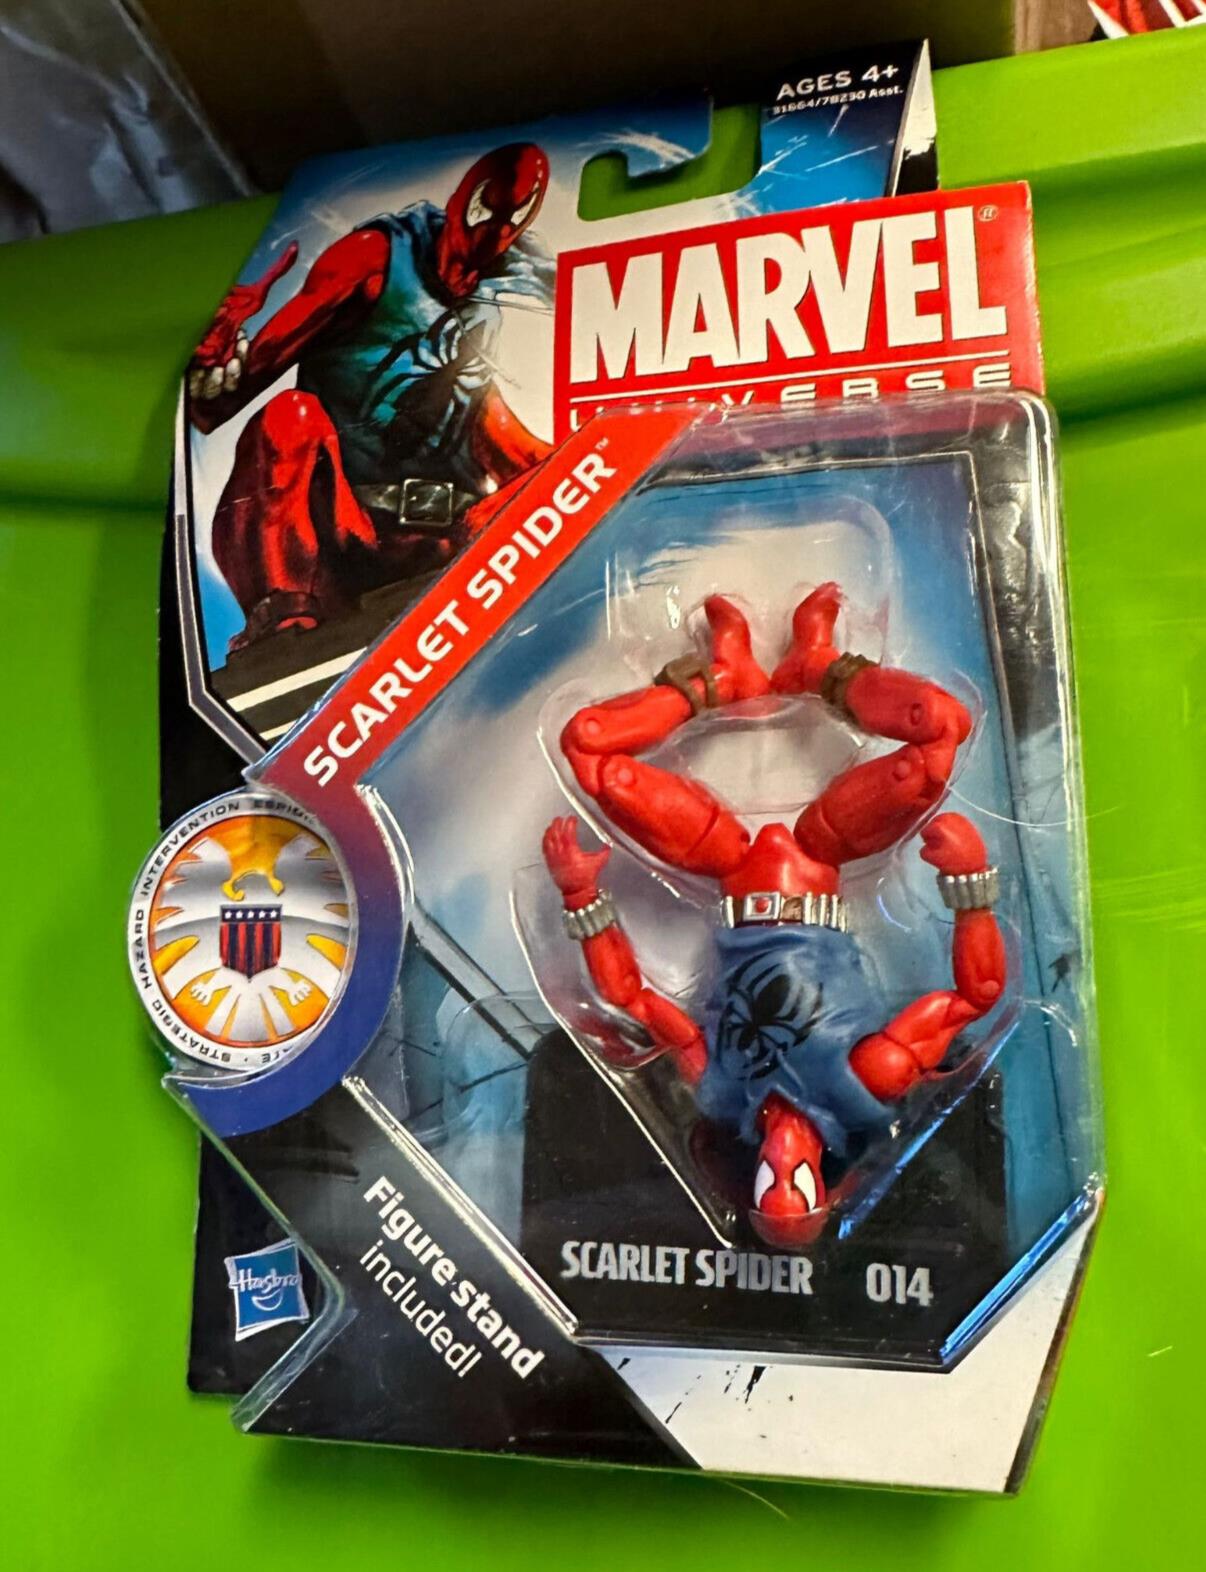 2010 Marvel Universe Series 3 3.75" Scarlet Spider Standing Figure Hasbro 014